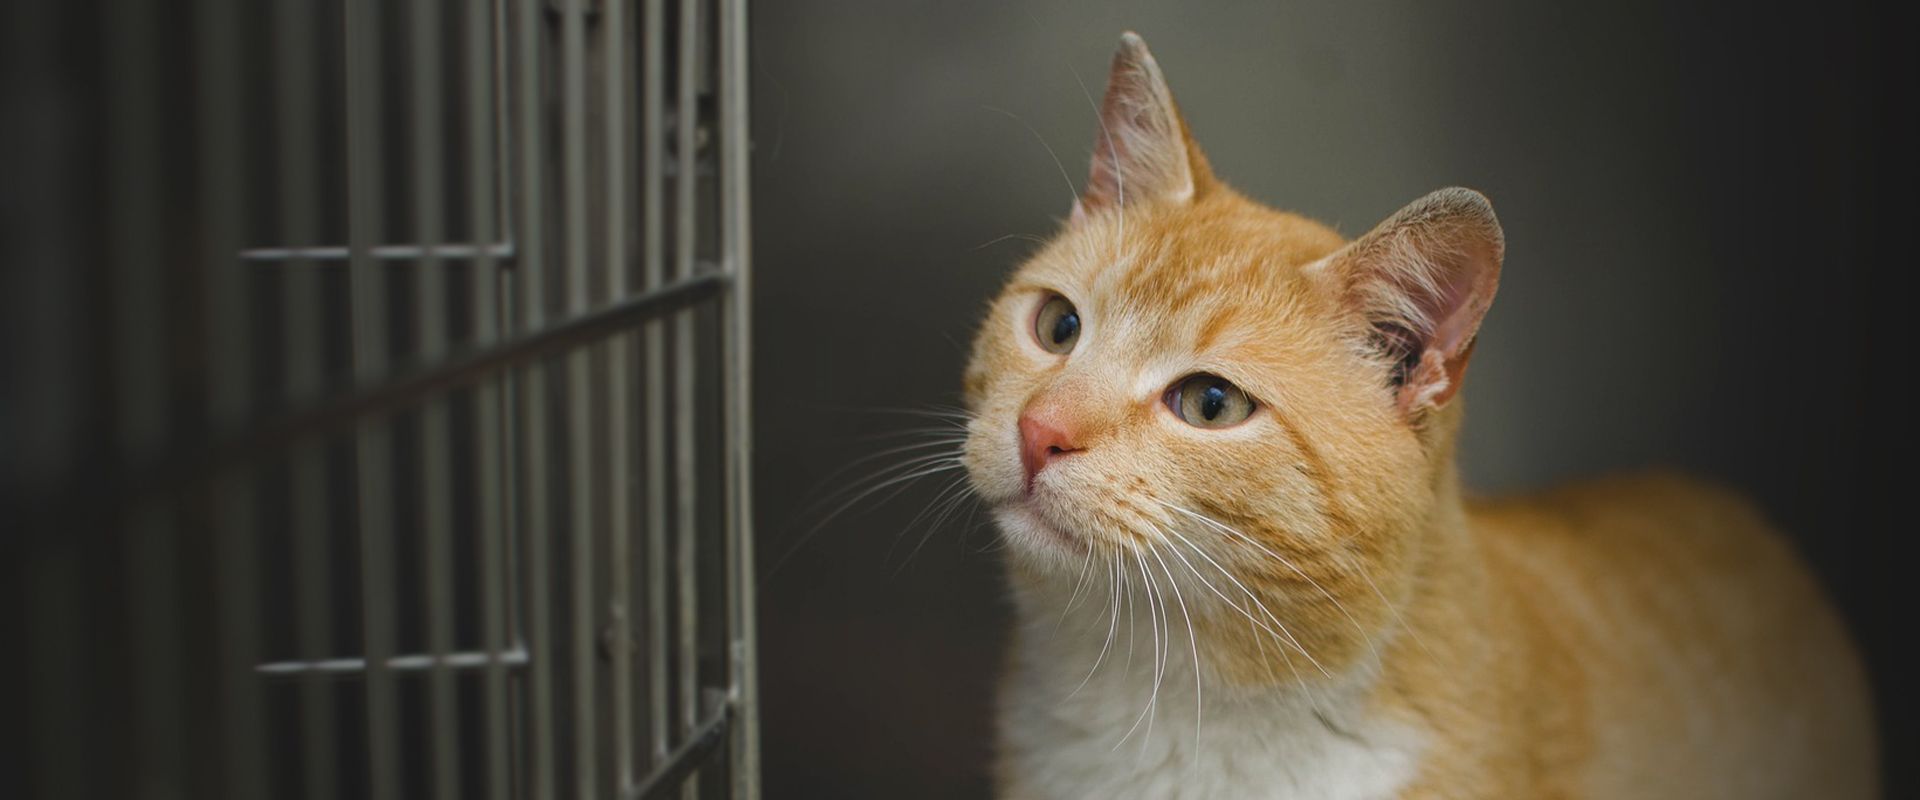 orange cat in a kennel